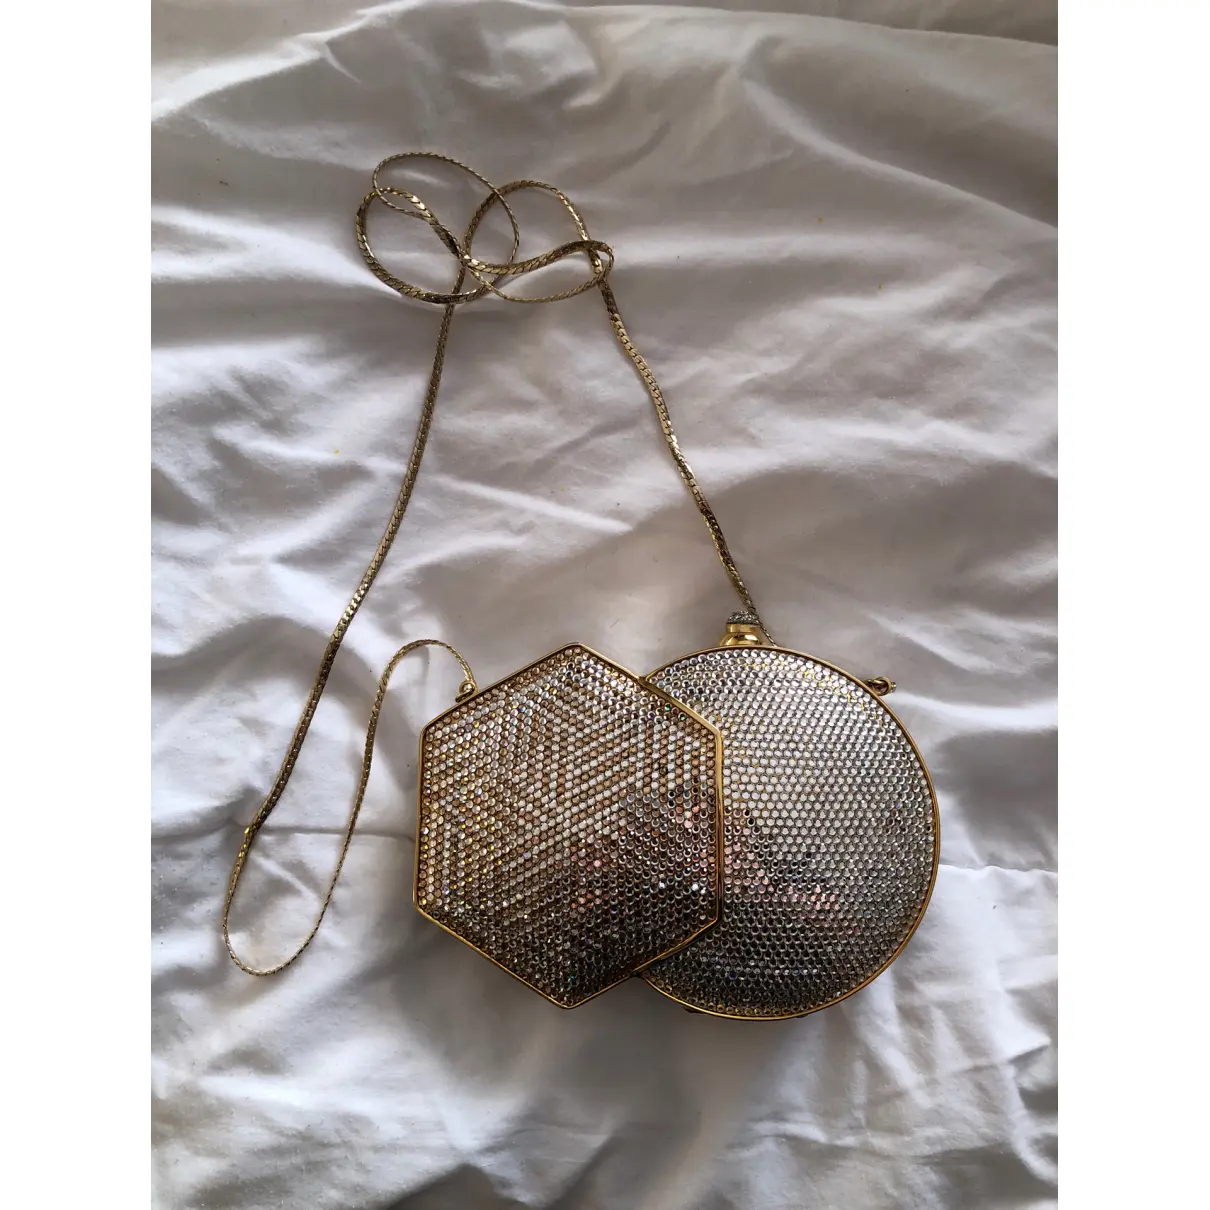 Buy Judith Leiber Handbag online - Vintage